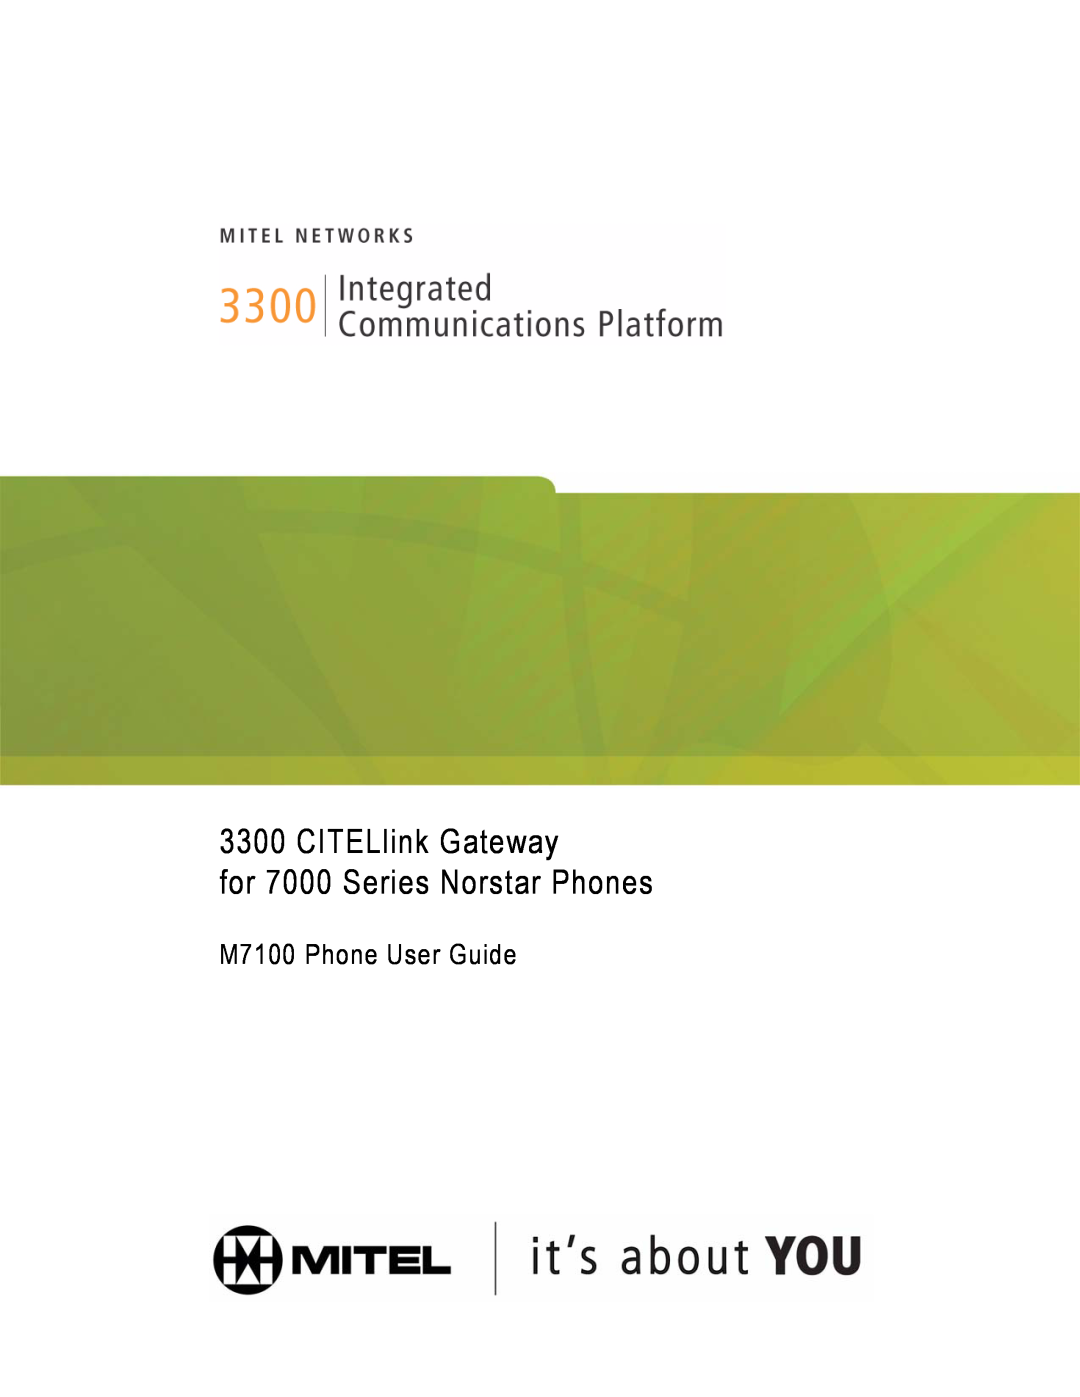 Mitel manual CITELlink Gateway for 7000 Series Norstar Phones, M7100 Phone User Guide 